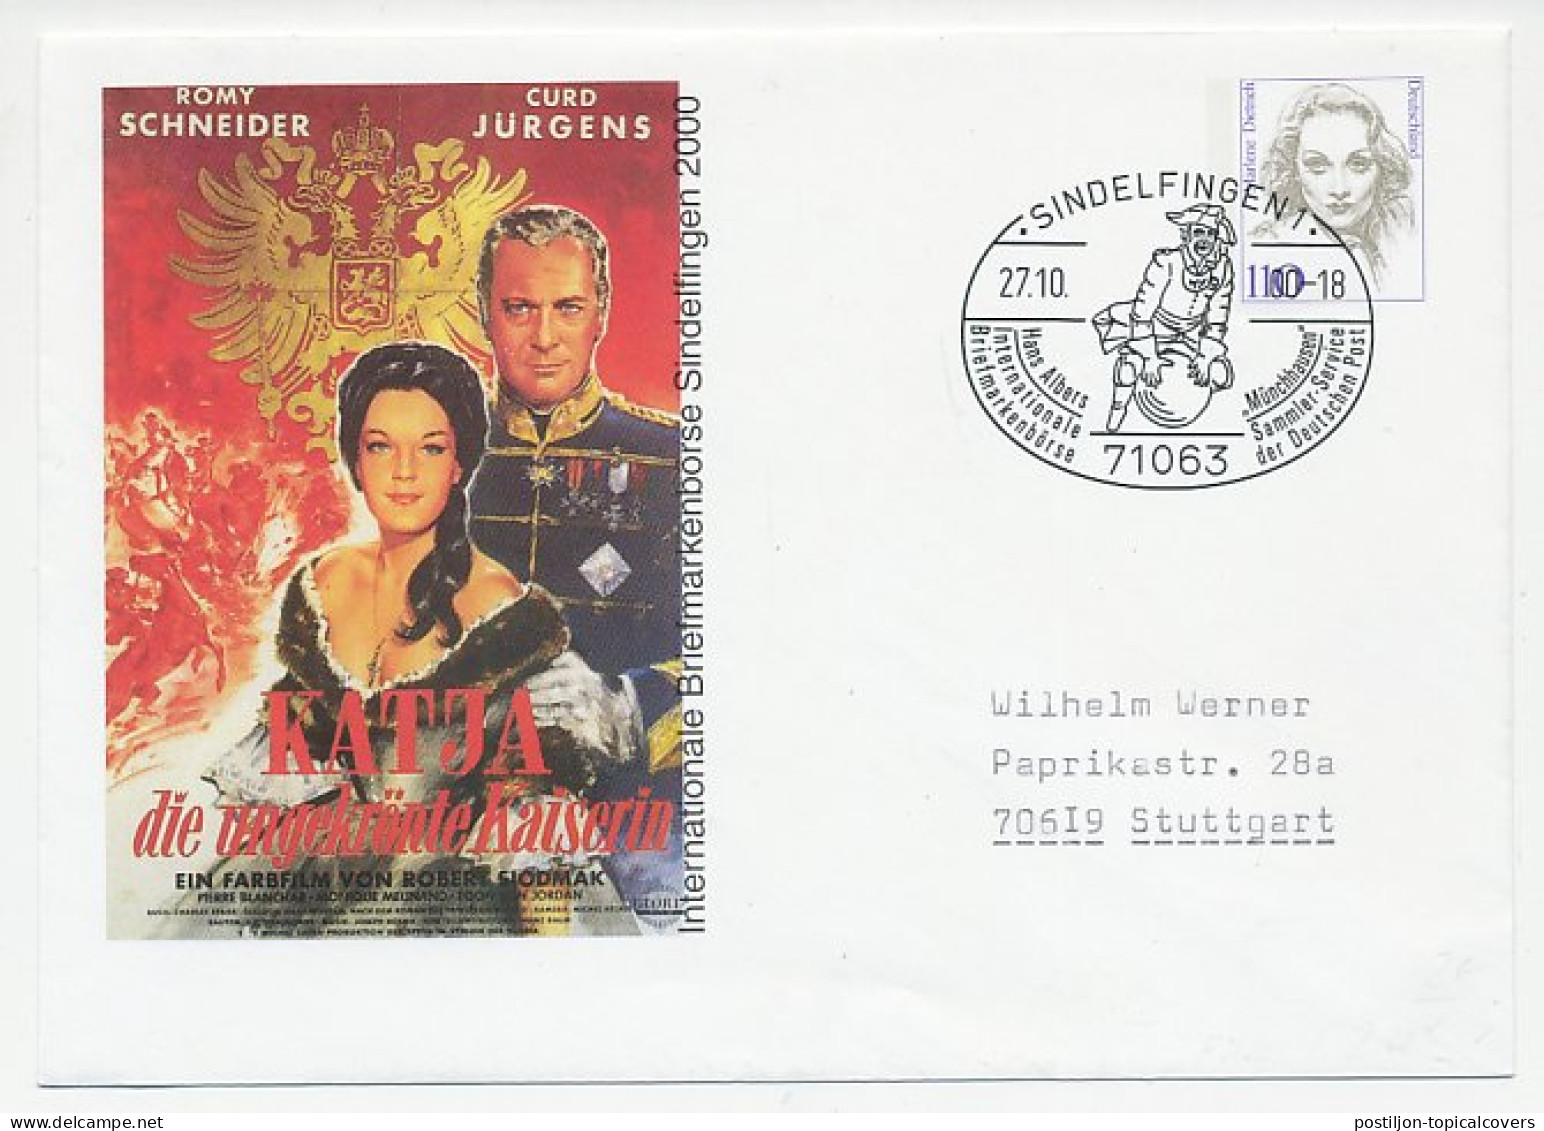 Postal Stationery / Postmark Germany 2000 Katja - The Uncrowned Empress  - Kino